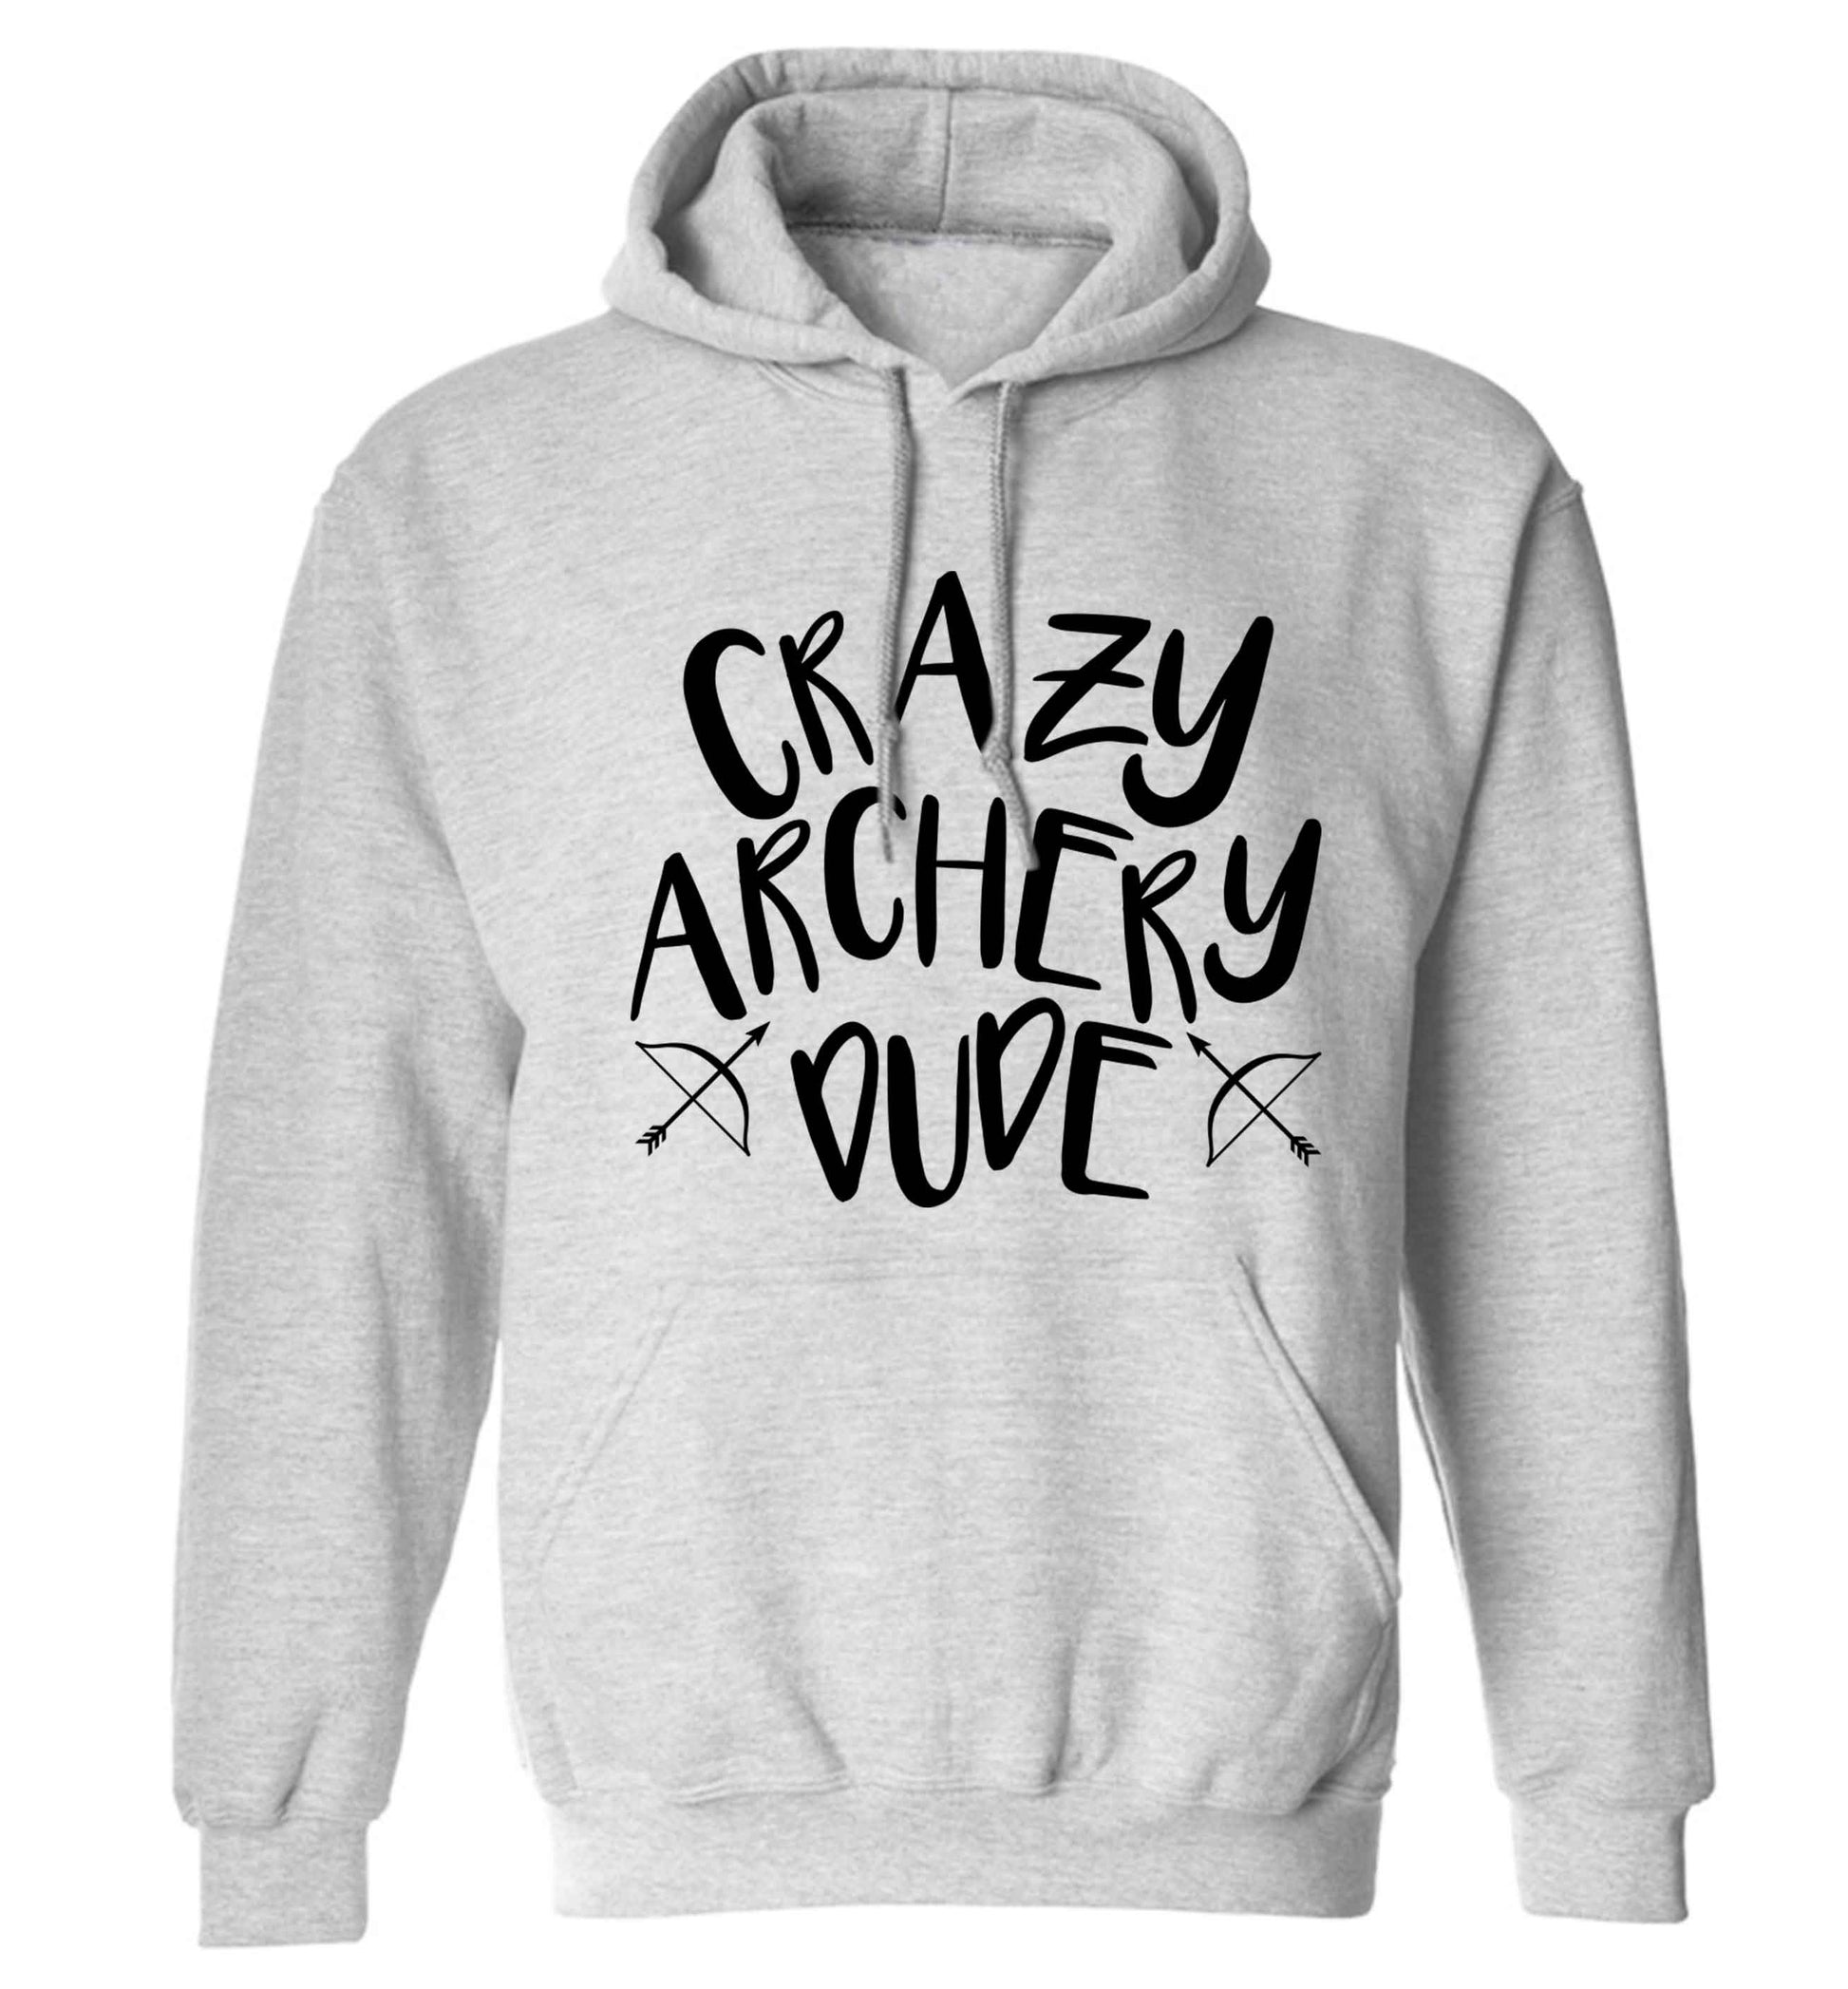 Crazy archery dude adults unisex grey hoodie 2XL